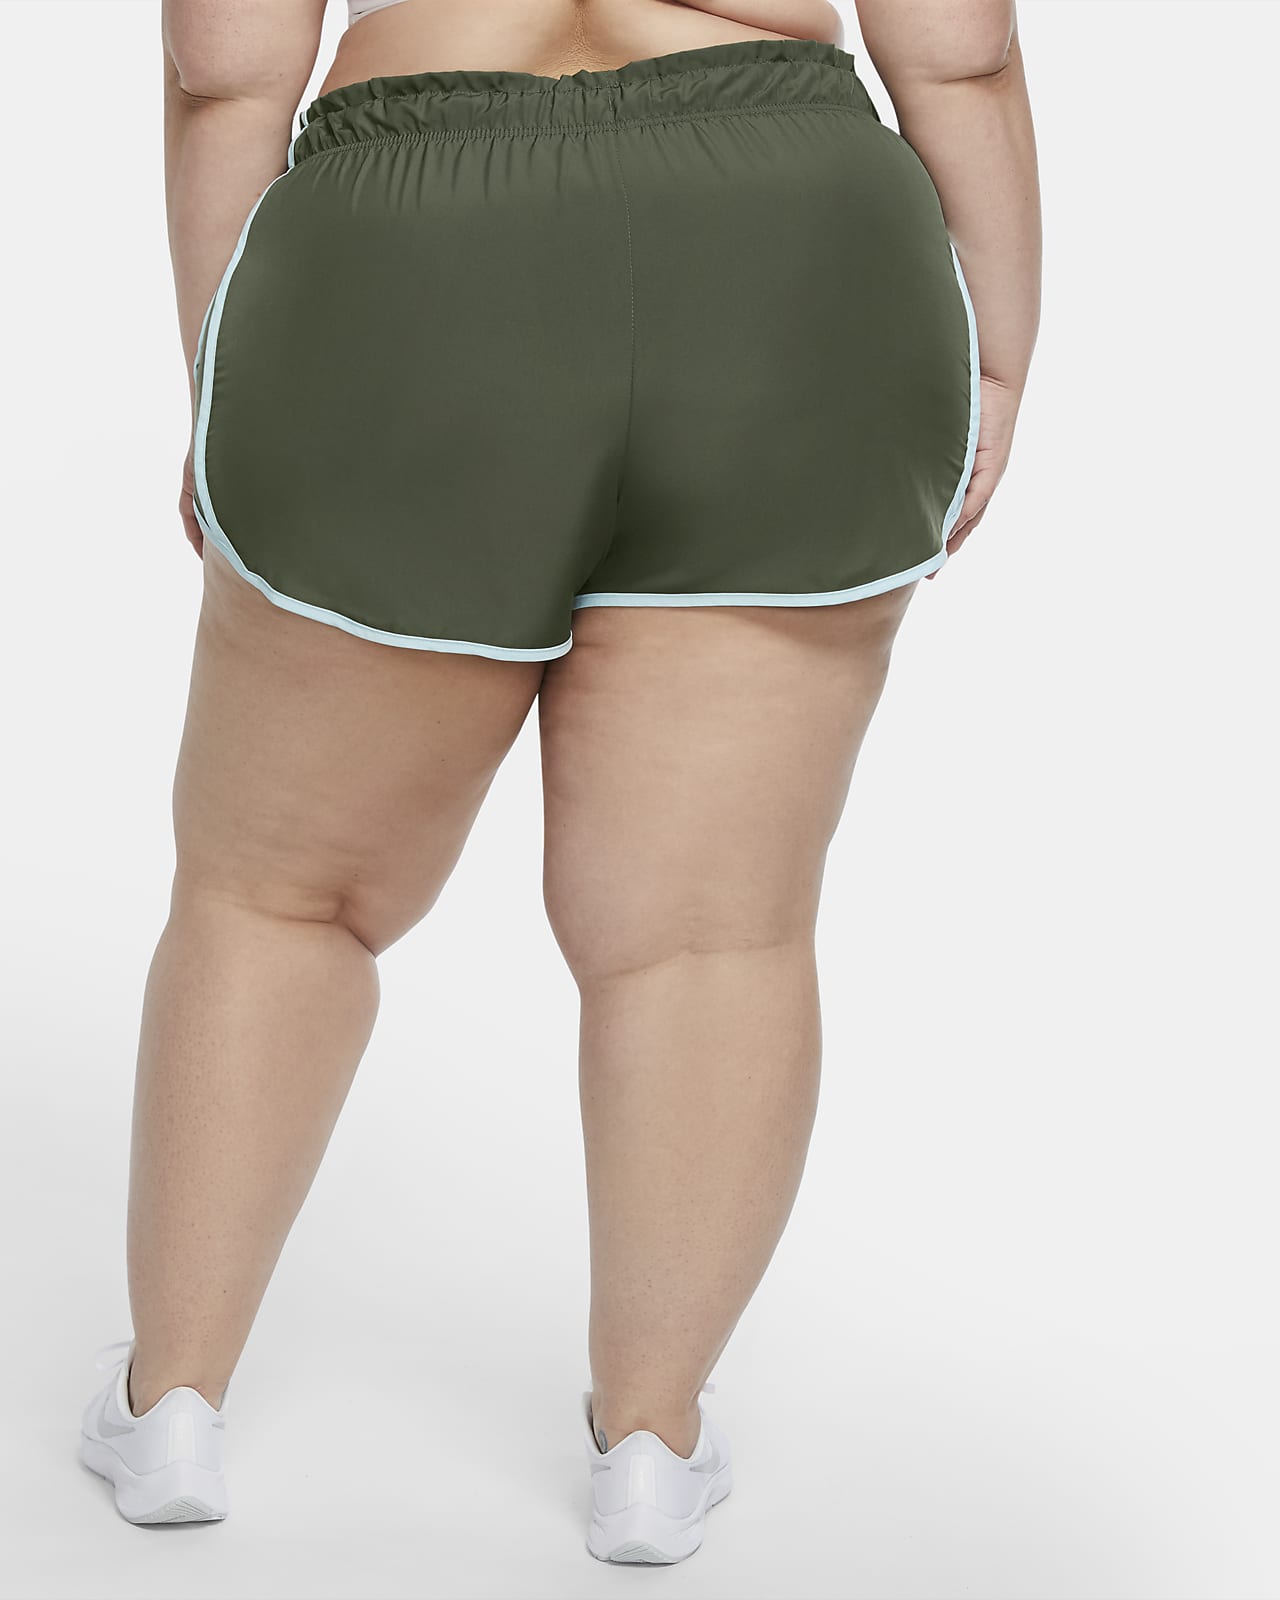 nike women's plus size running shorts